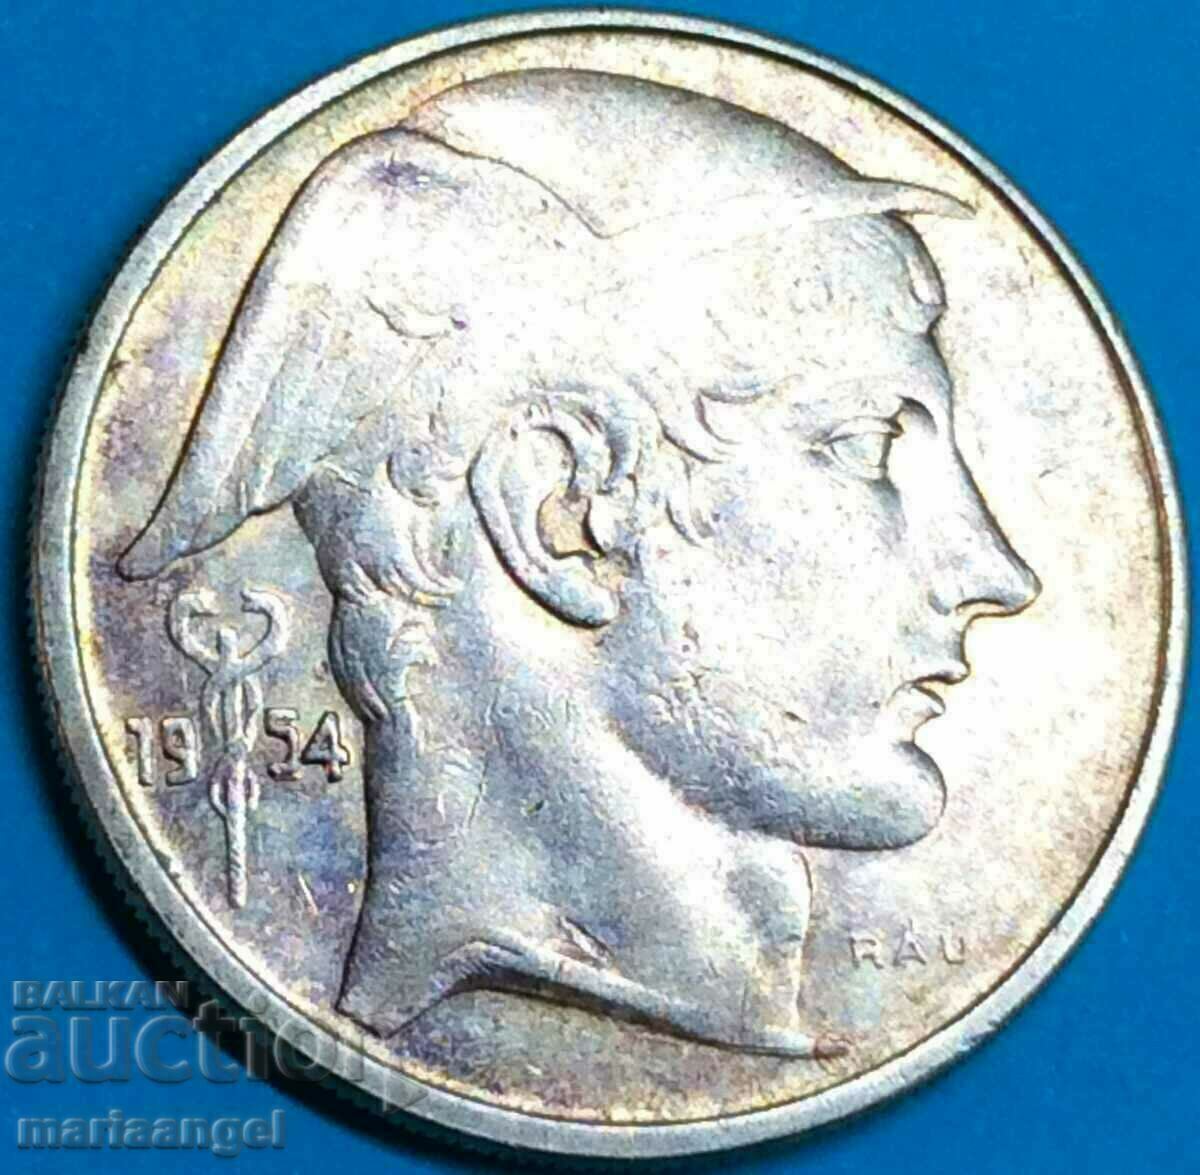 20 francs 1954 Belgium France silver Patina - rare and expensive